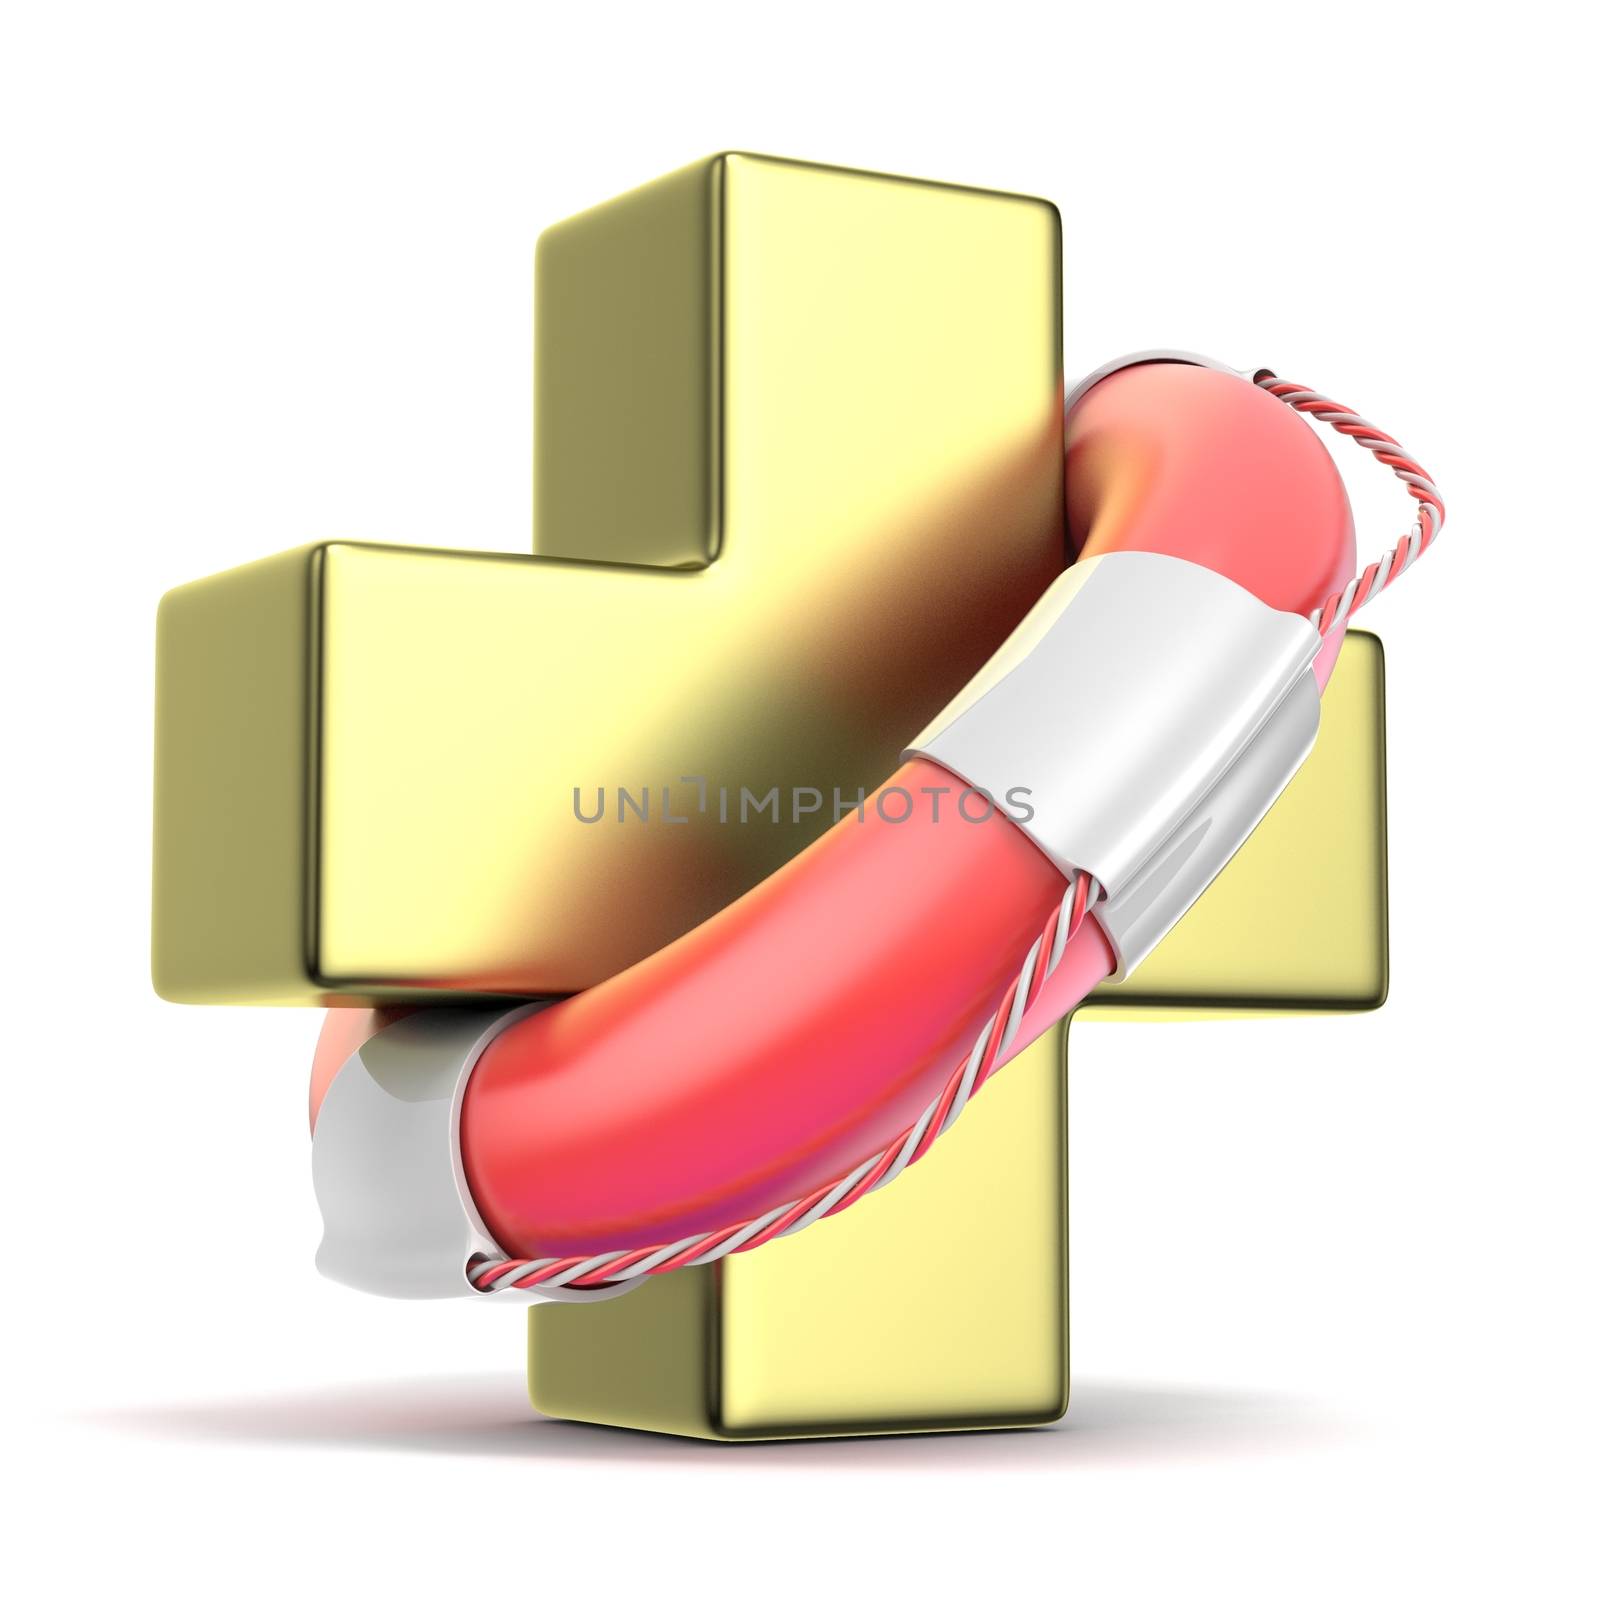 Lifebelt on golden medical cross sign. 3D render illustration isolated on white background